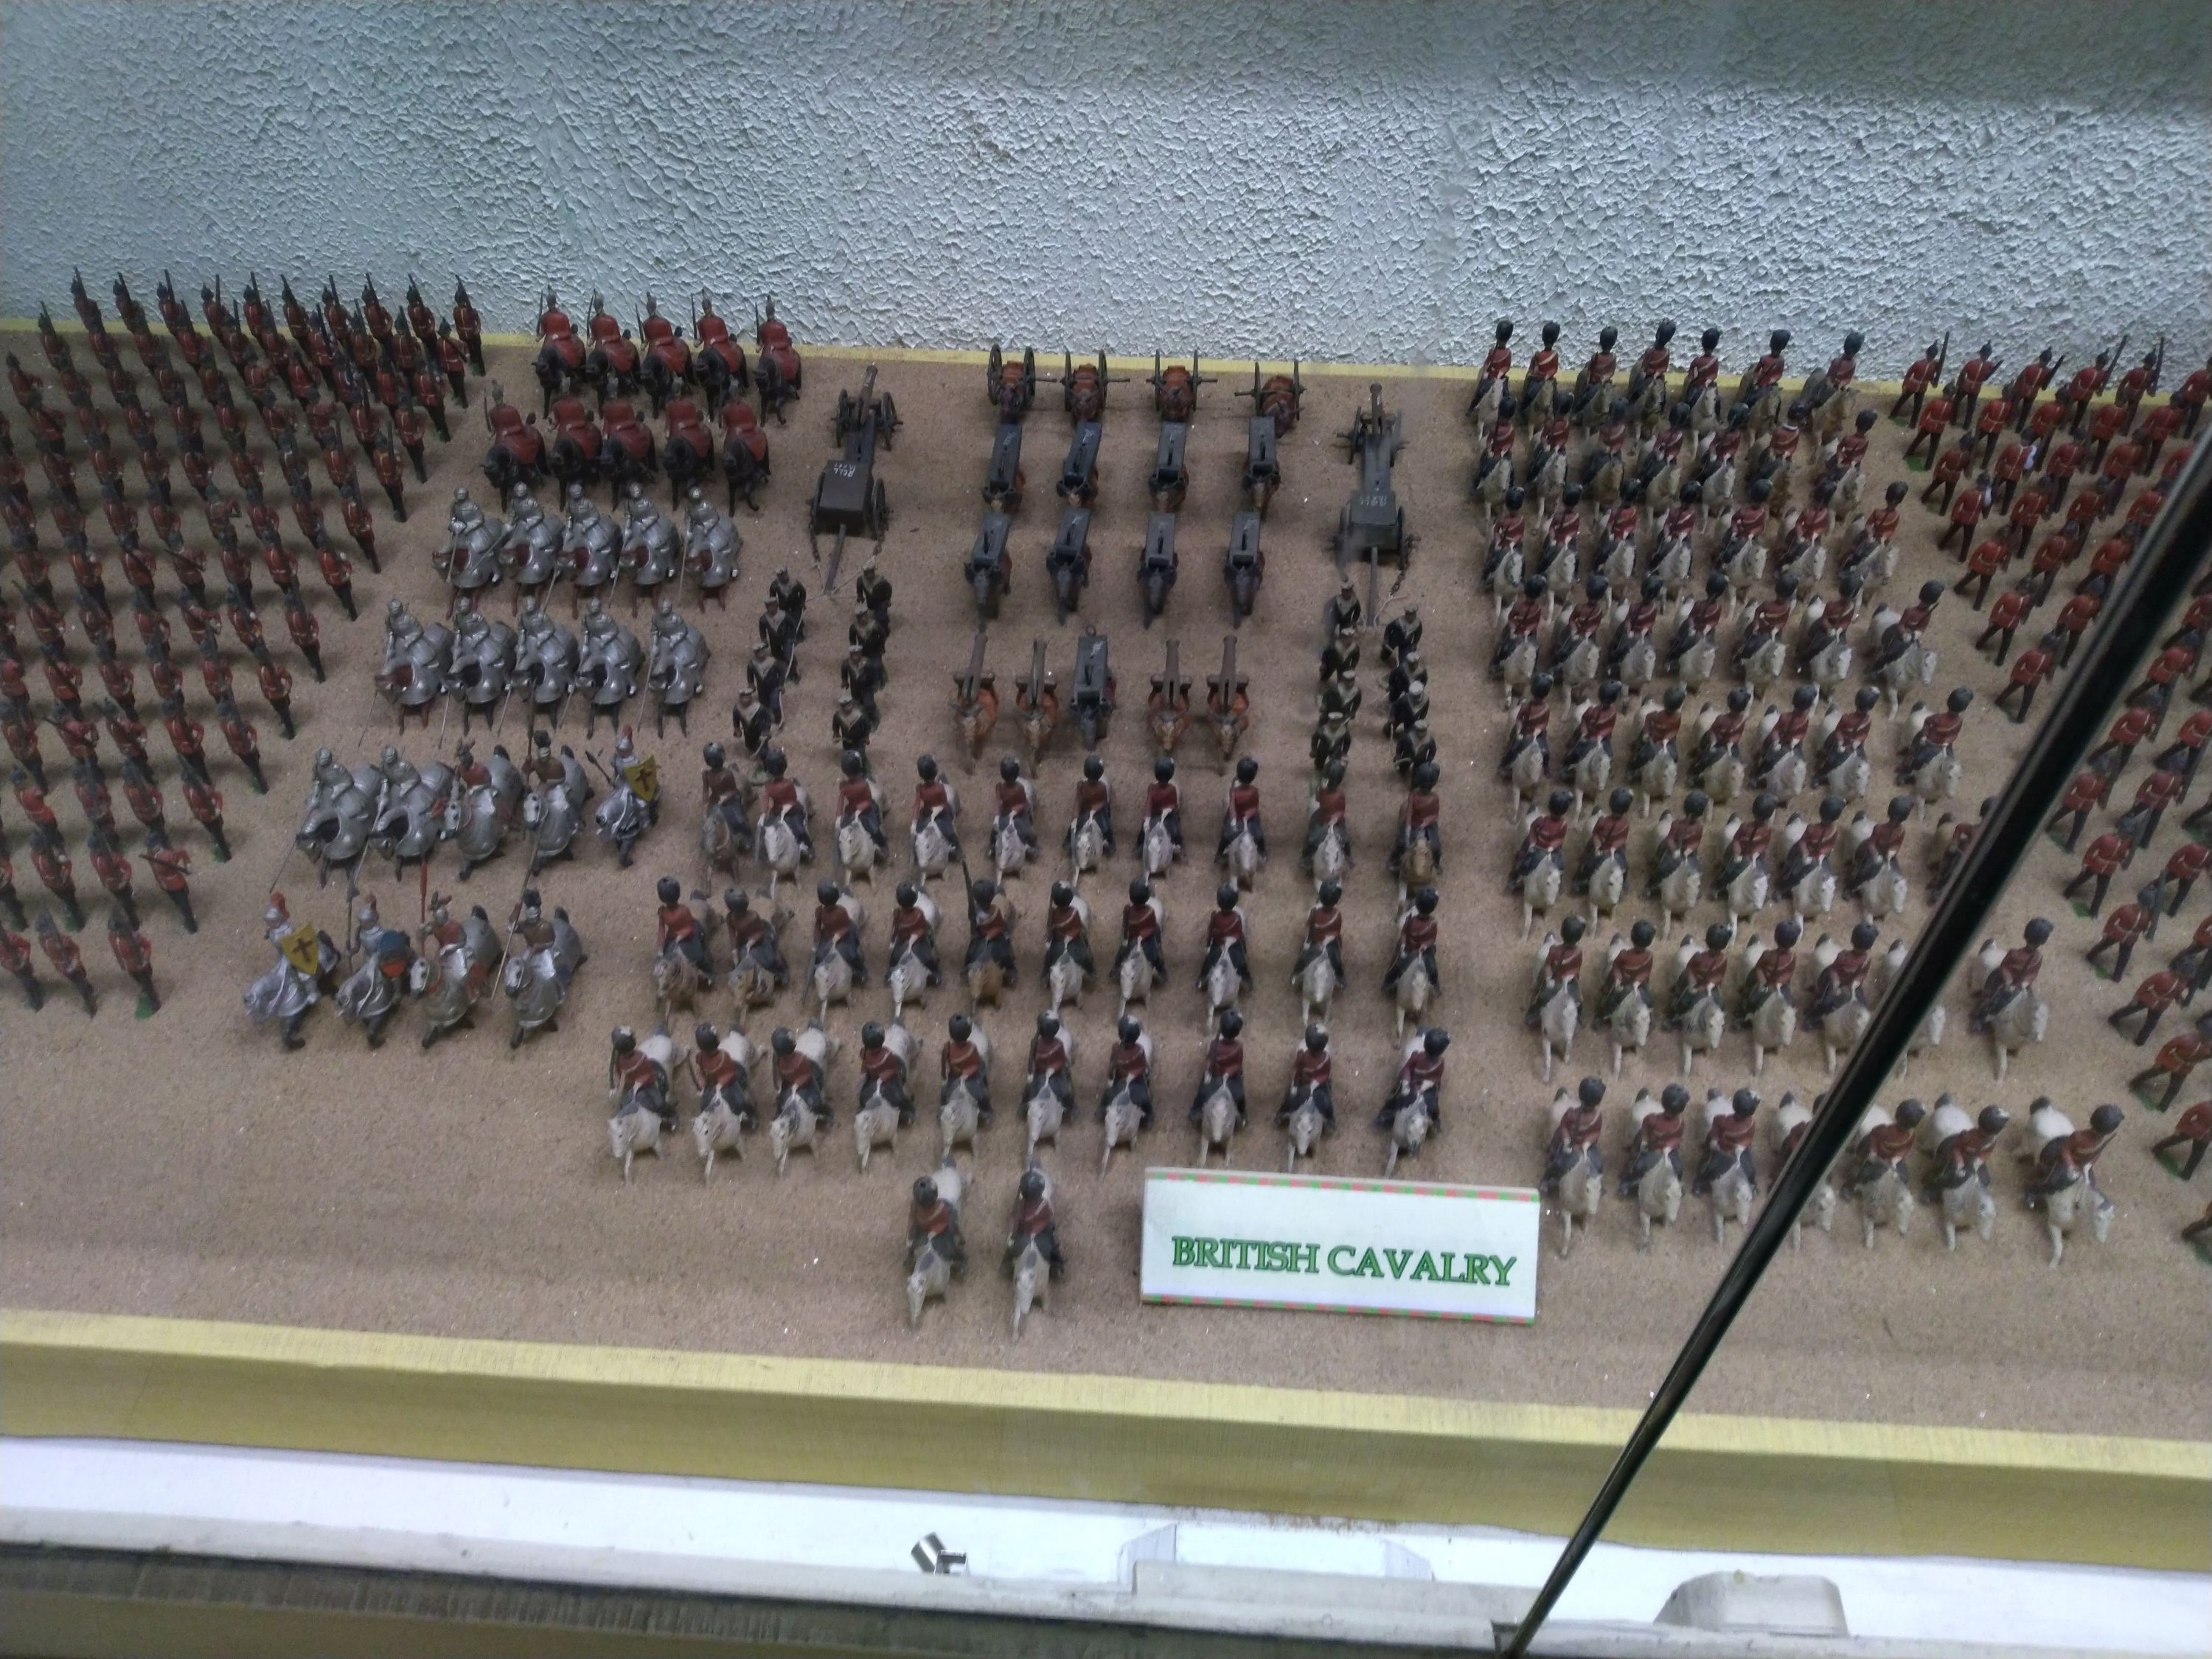 British Cavalry models